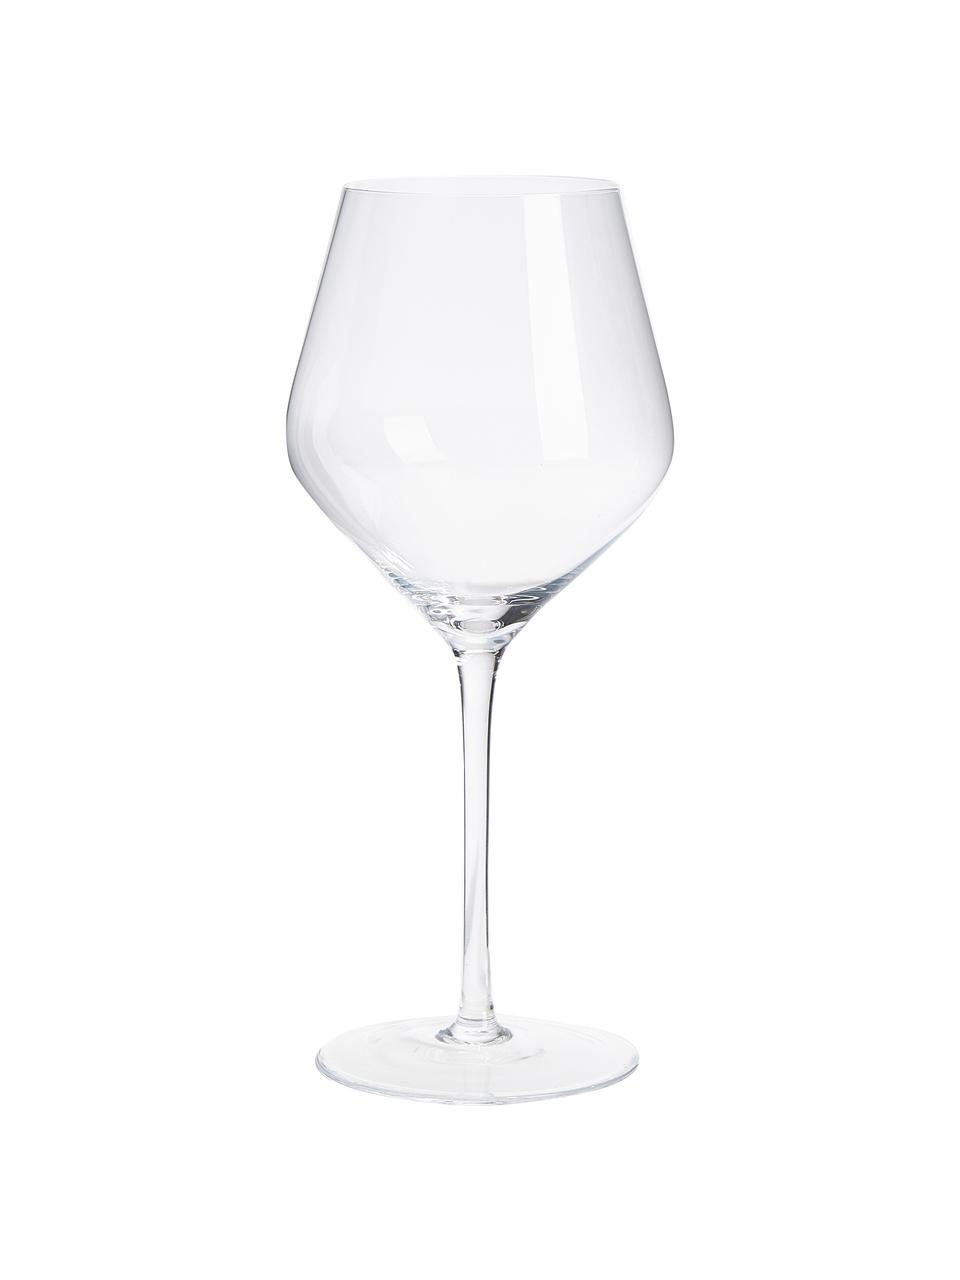 Bicchiere vino rosso in vetro soffiato Ays 4 pz, Vetro, Trasparente, Ø 7 x Alt. 25 cm, 700 ml